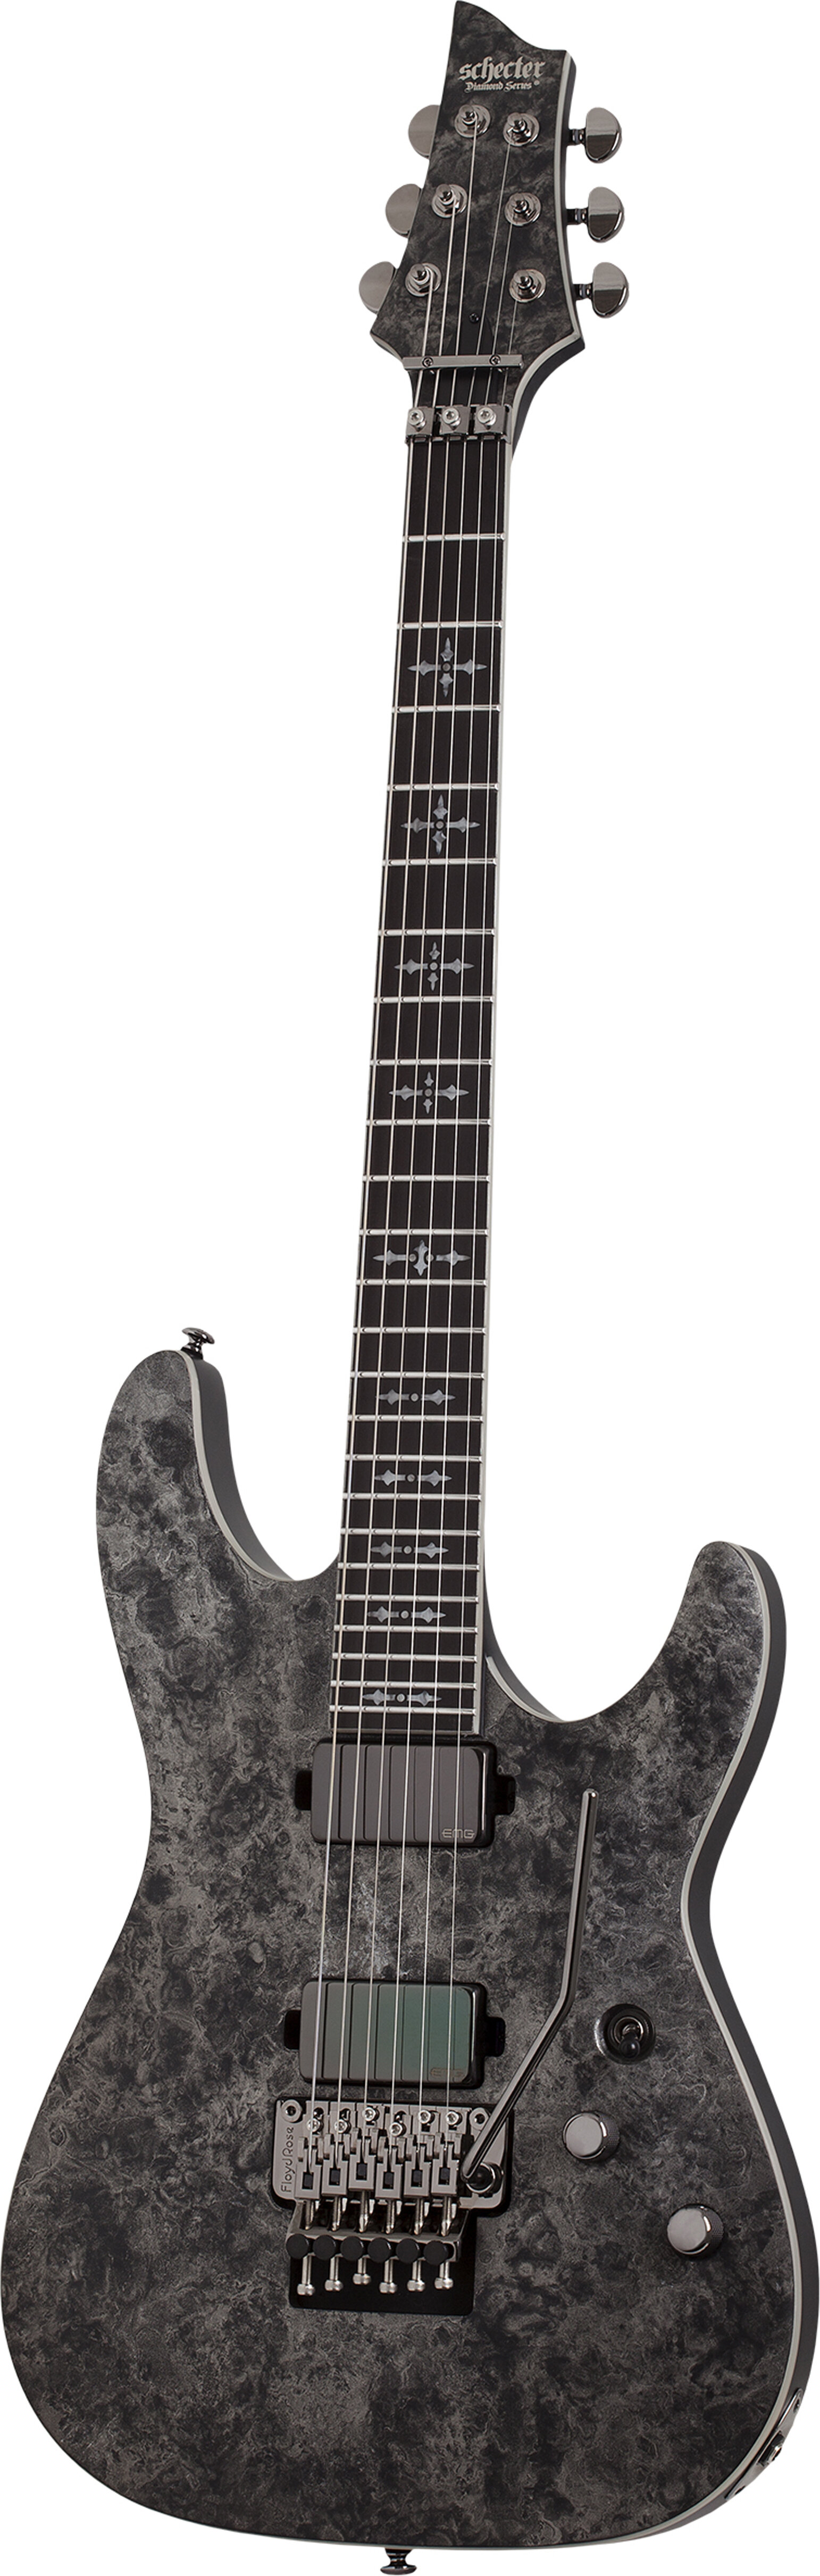 Schecter Ernie C C-1 Electric Guitar Black Reign -  911